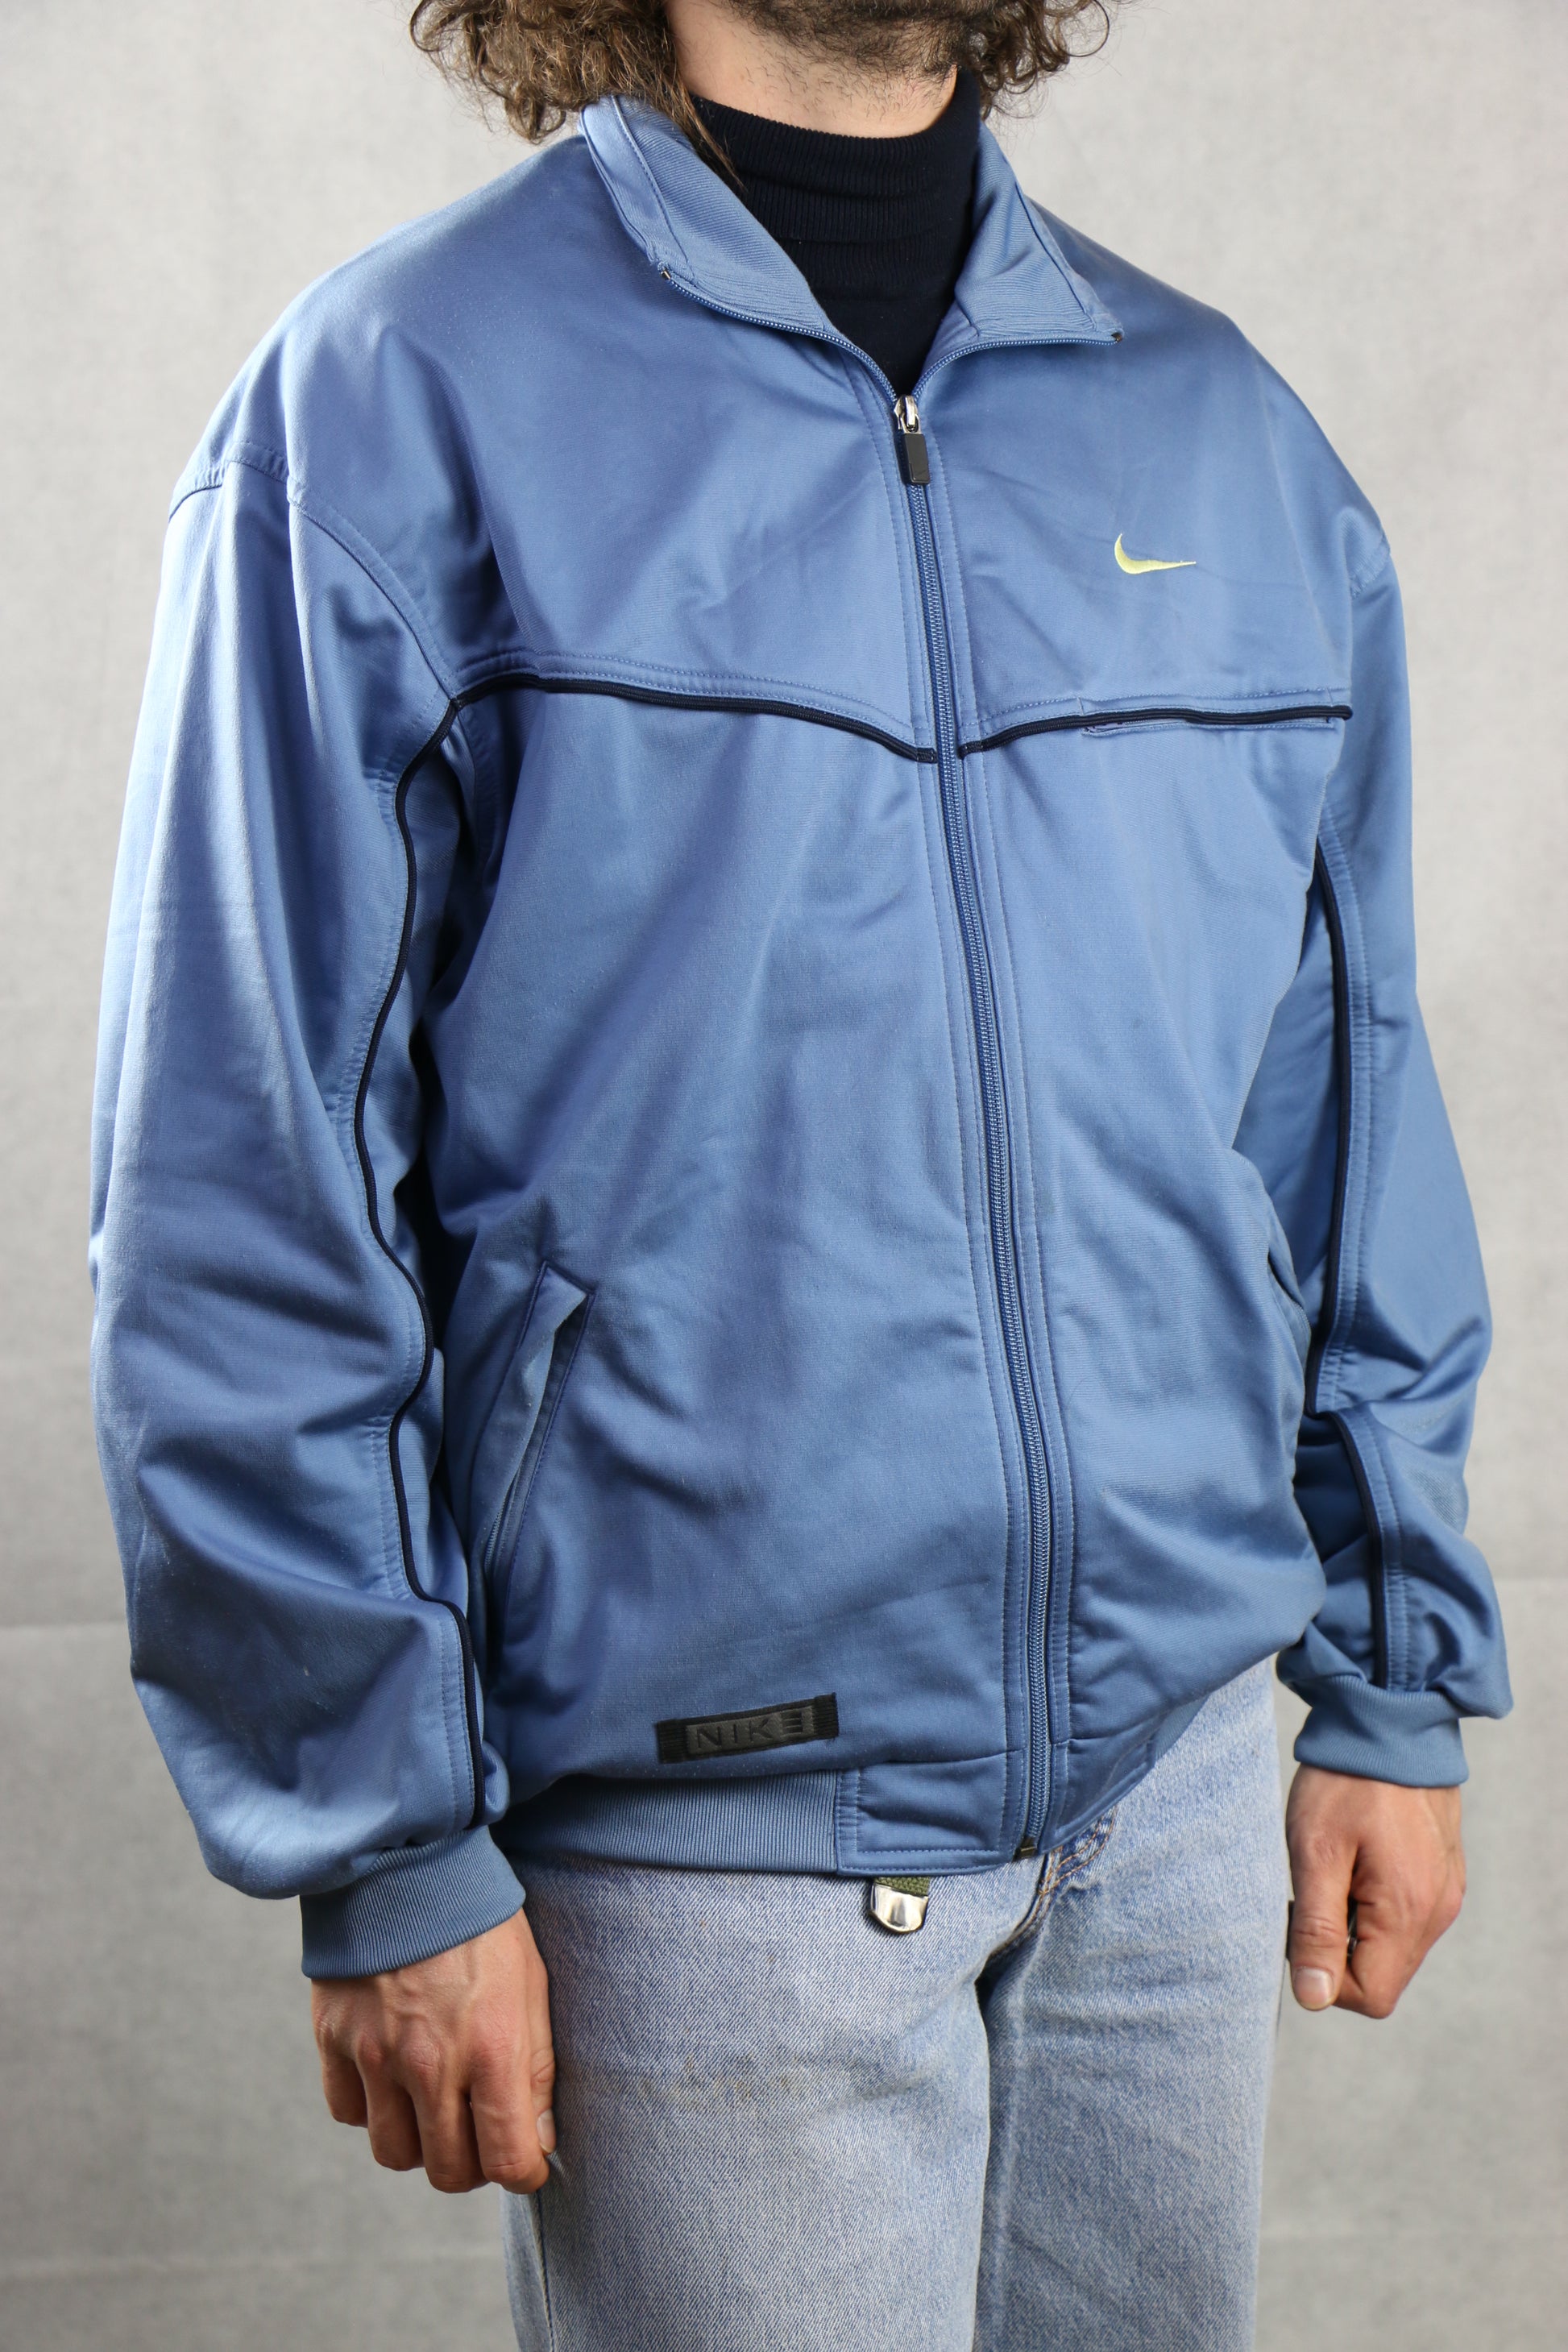 Nike Track Jacket - vintage clothing clochard92.com